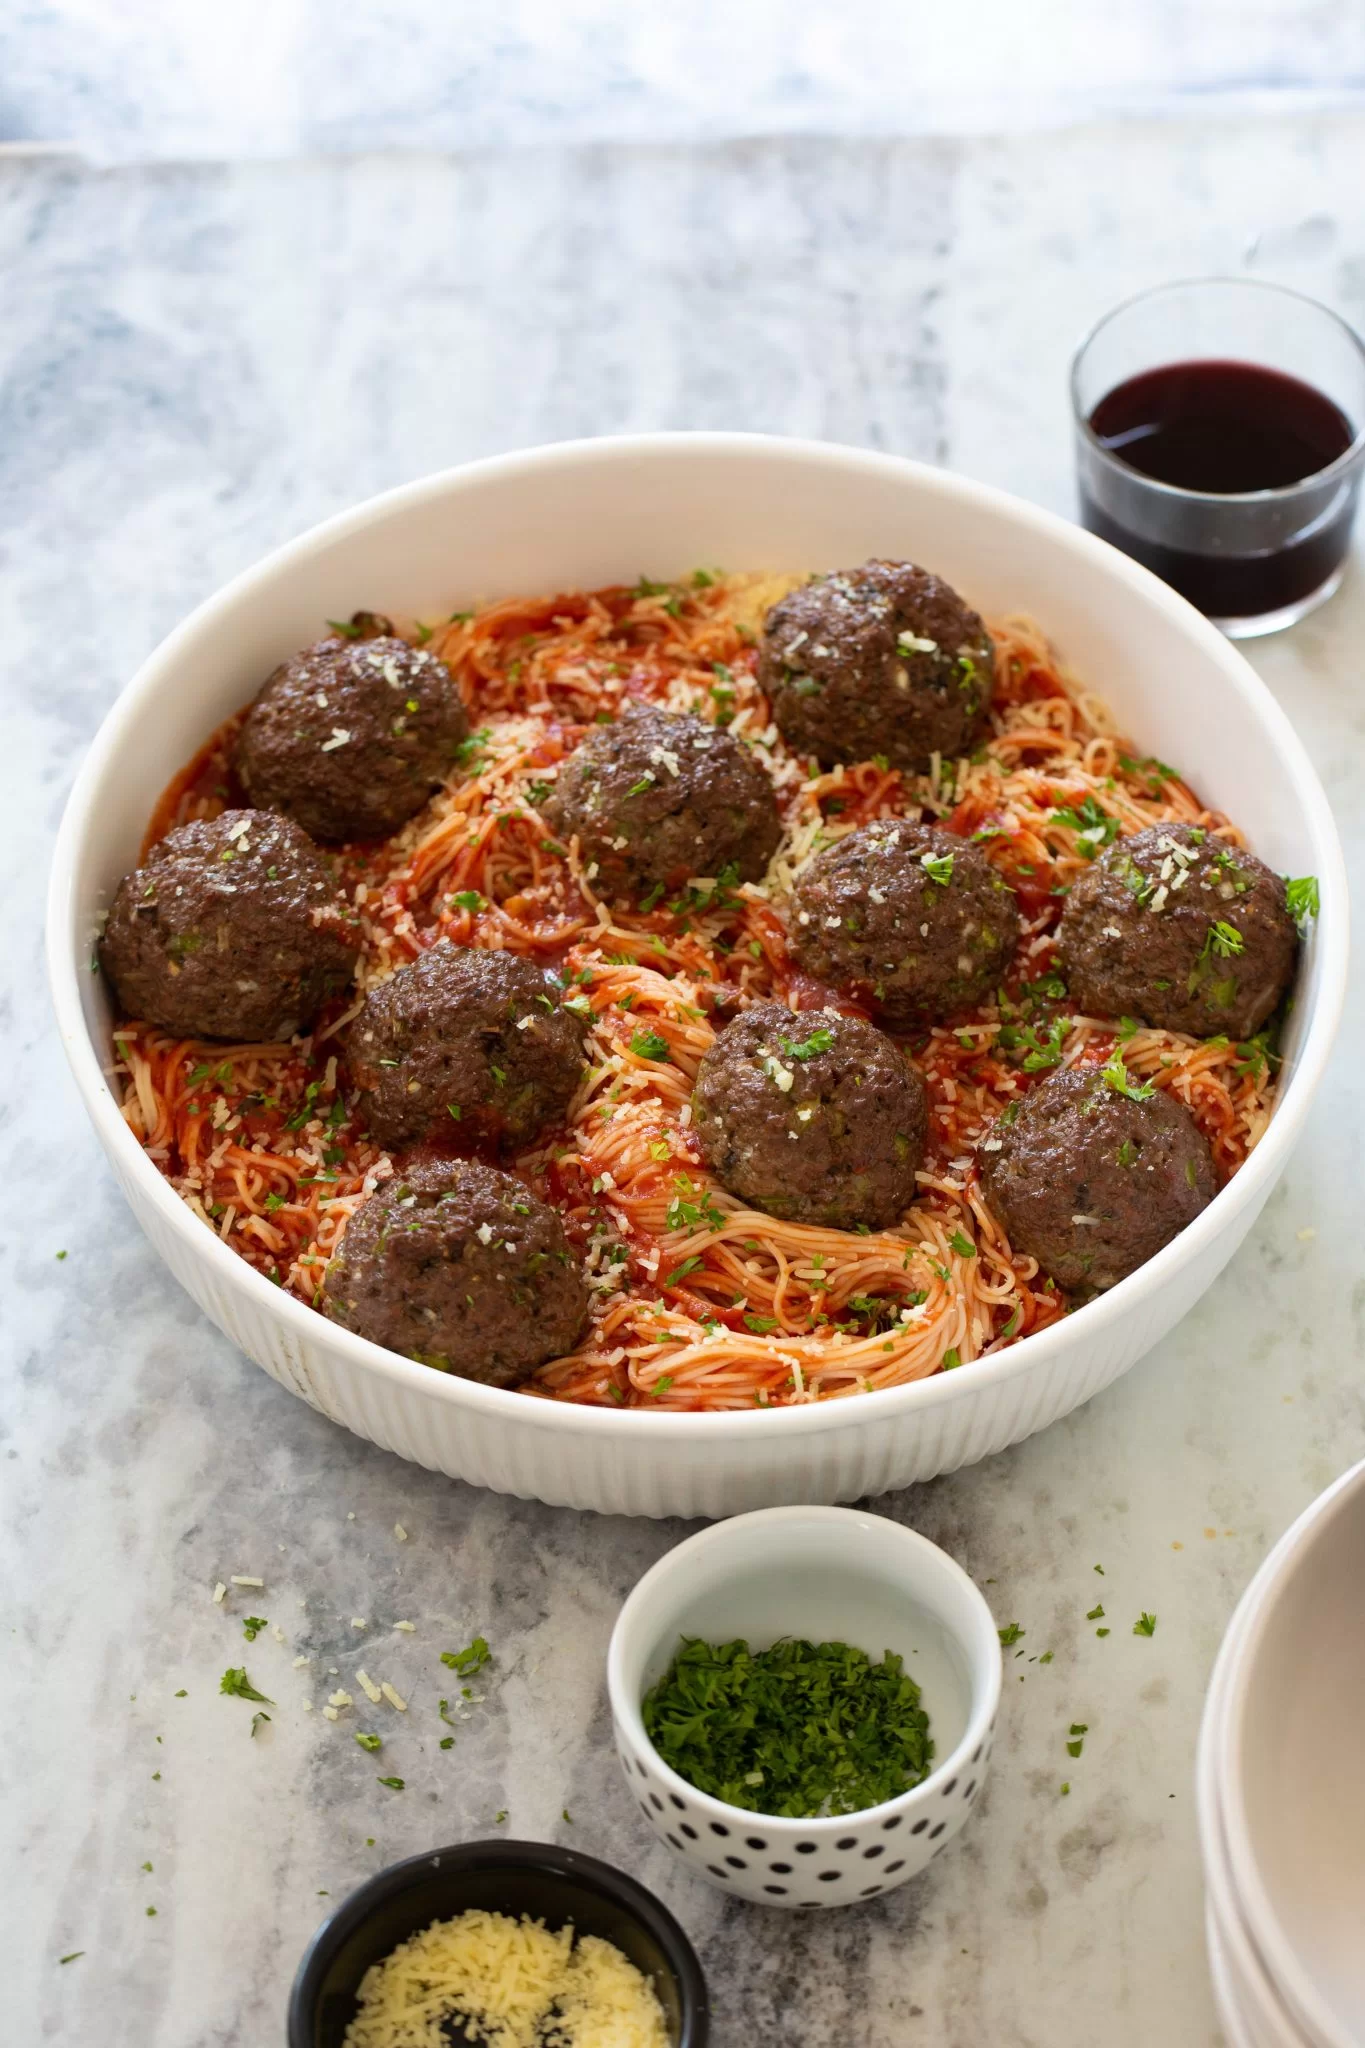 EASY SPAGHETTI AND MEATBALLS: Meatballs and spaghetti in a white bowl.